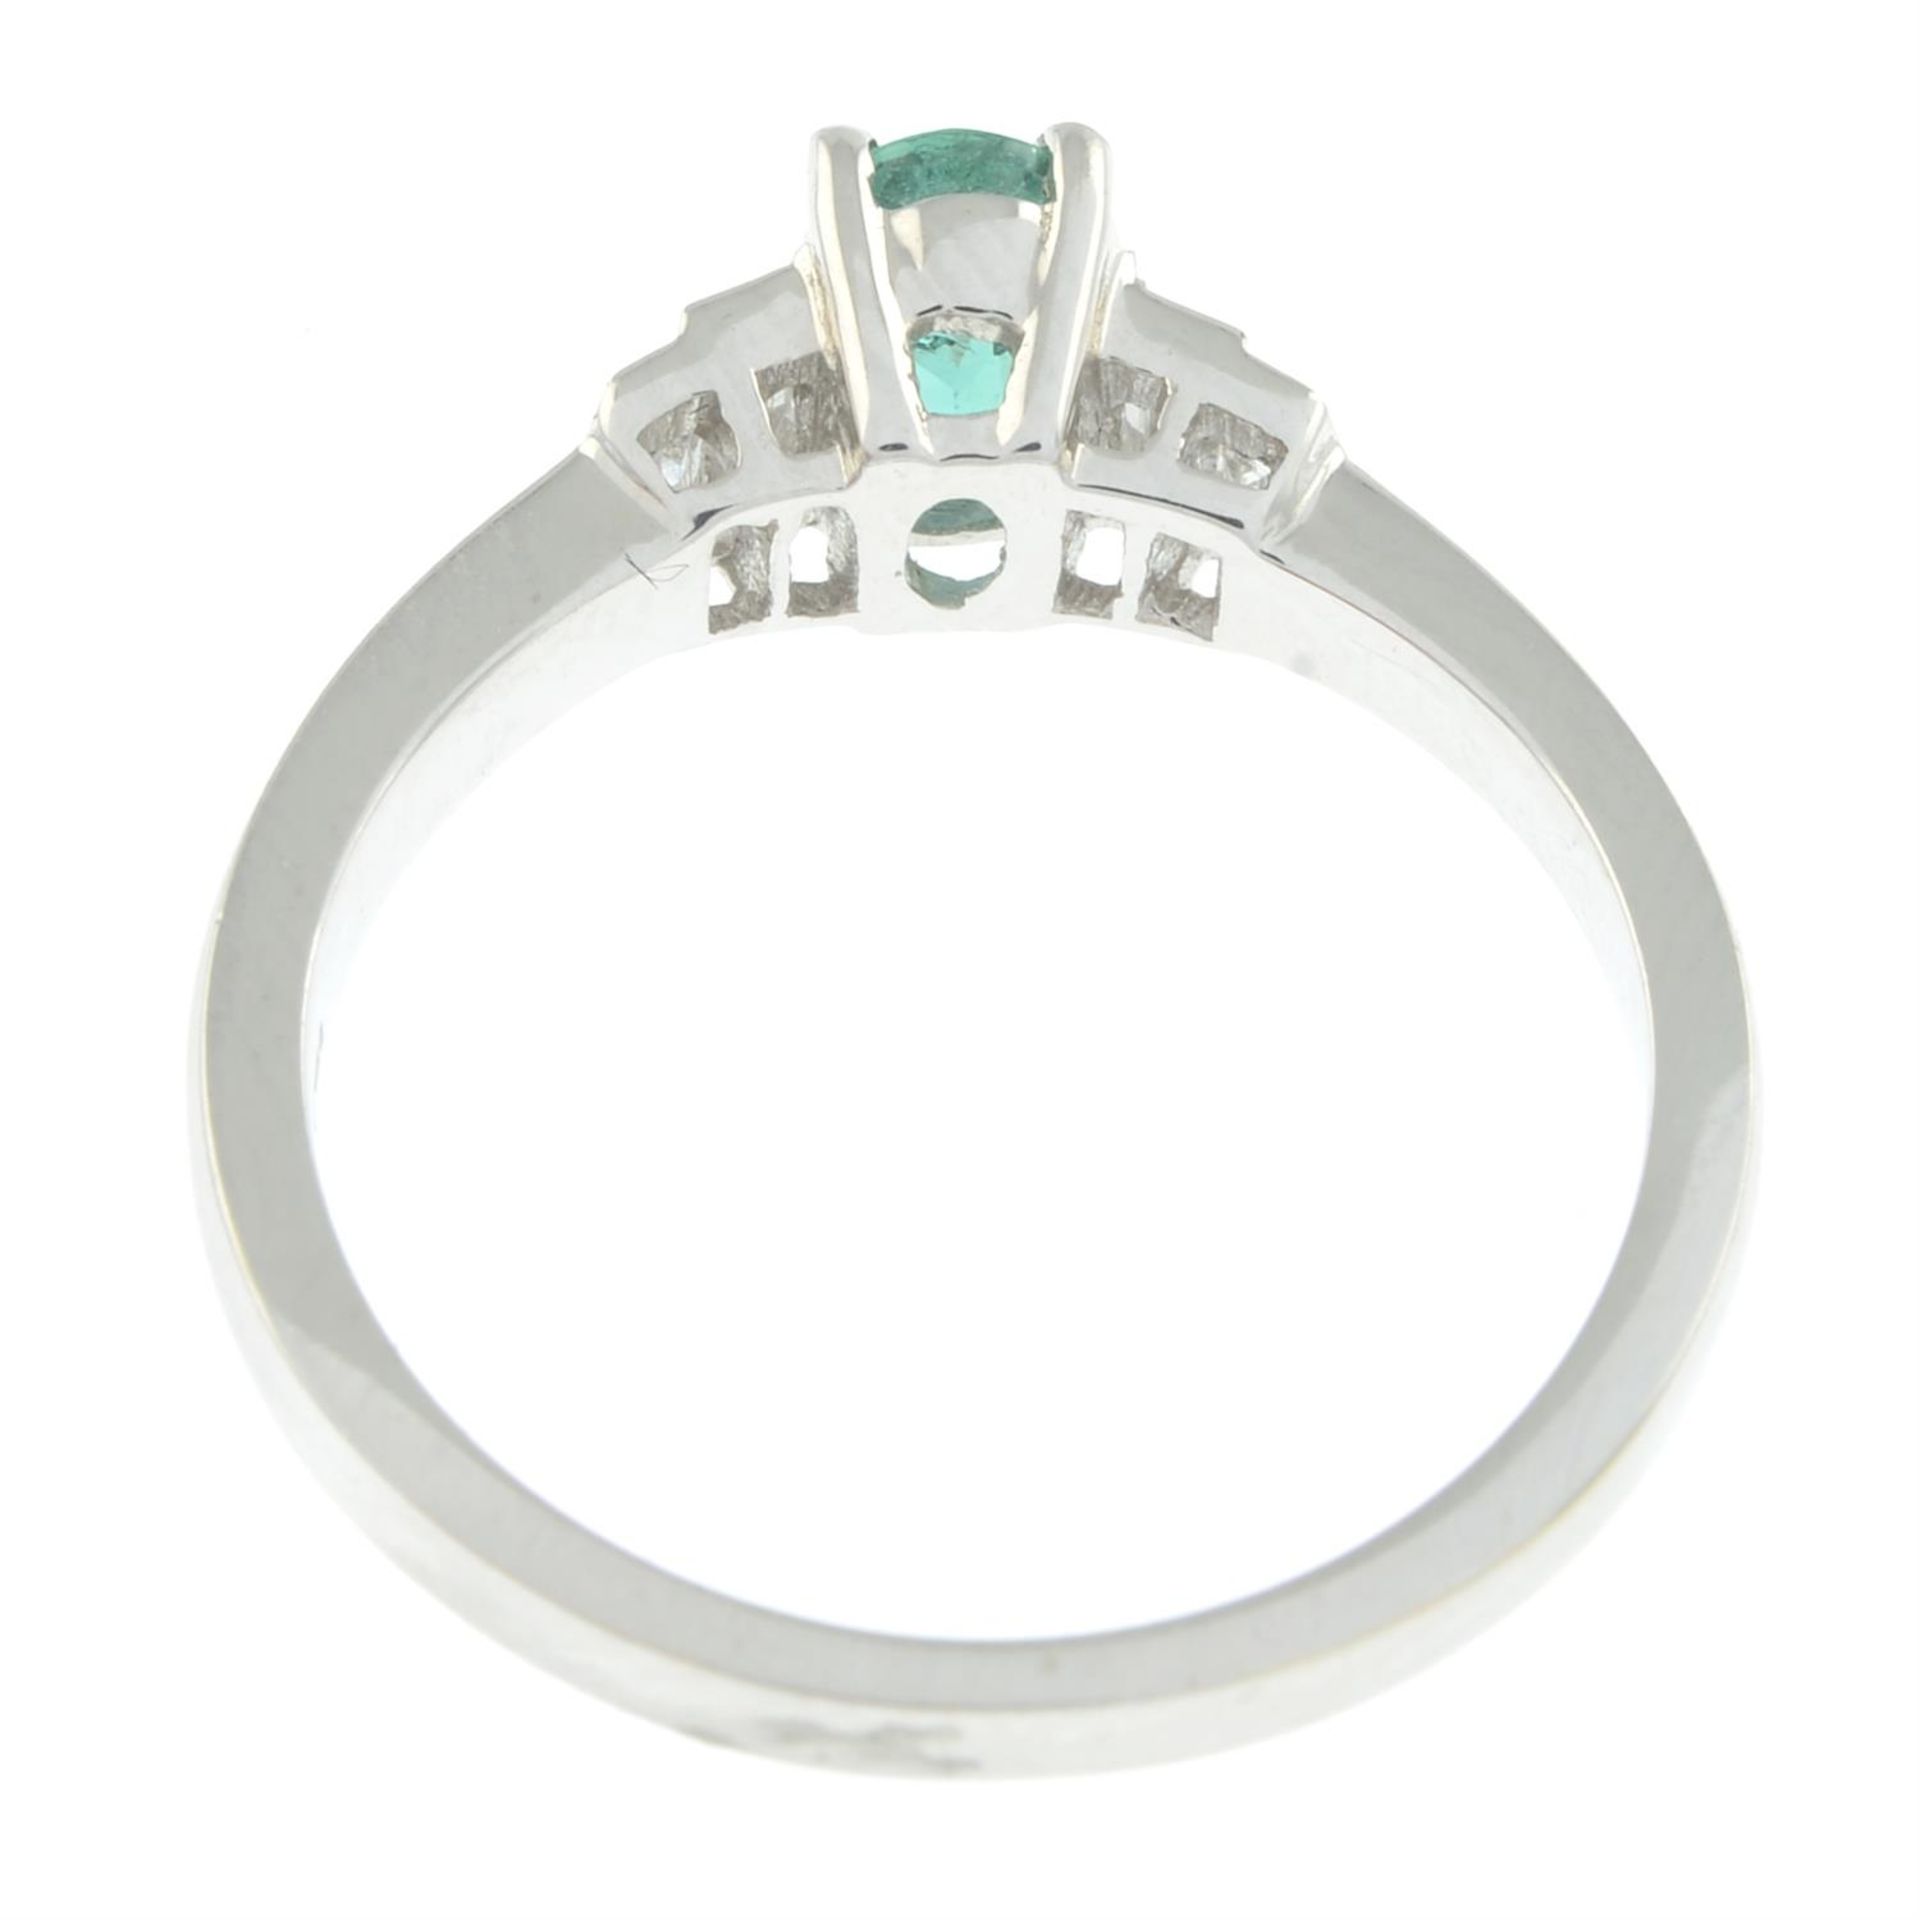 18ct gold emerald & diamond ring - Image 2 of 2